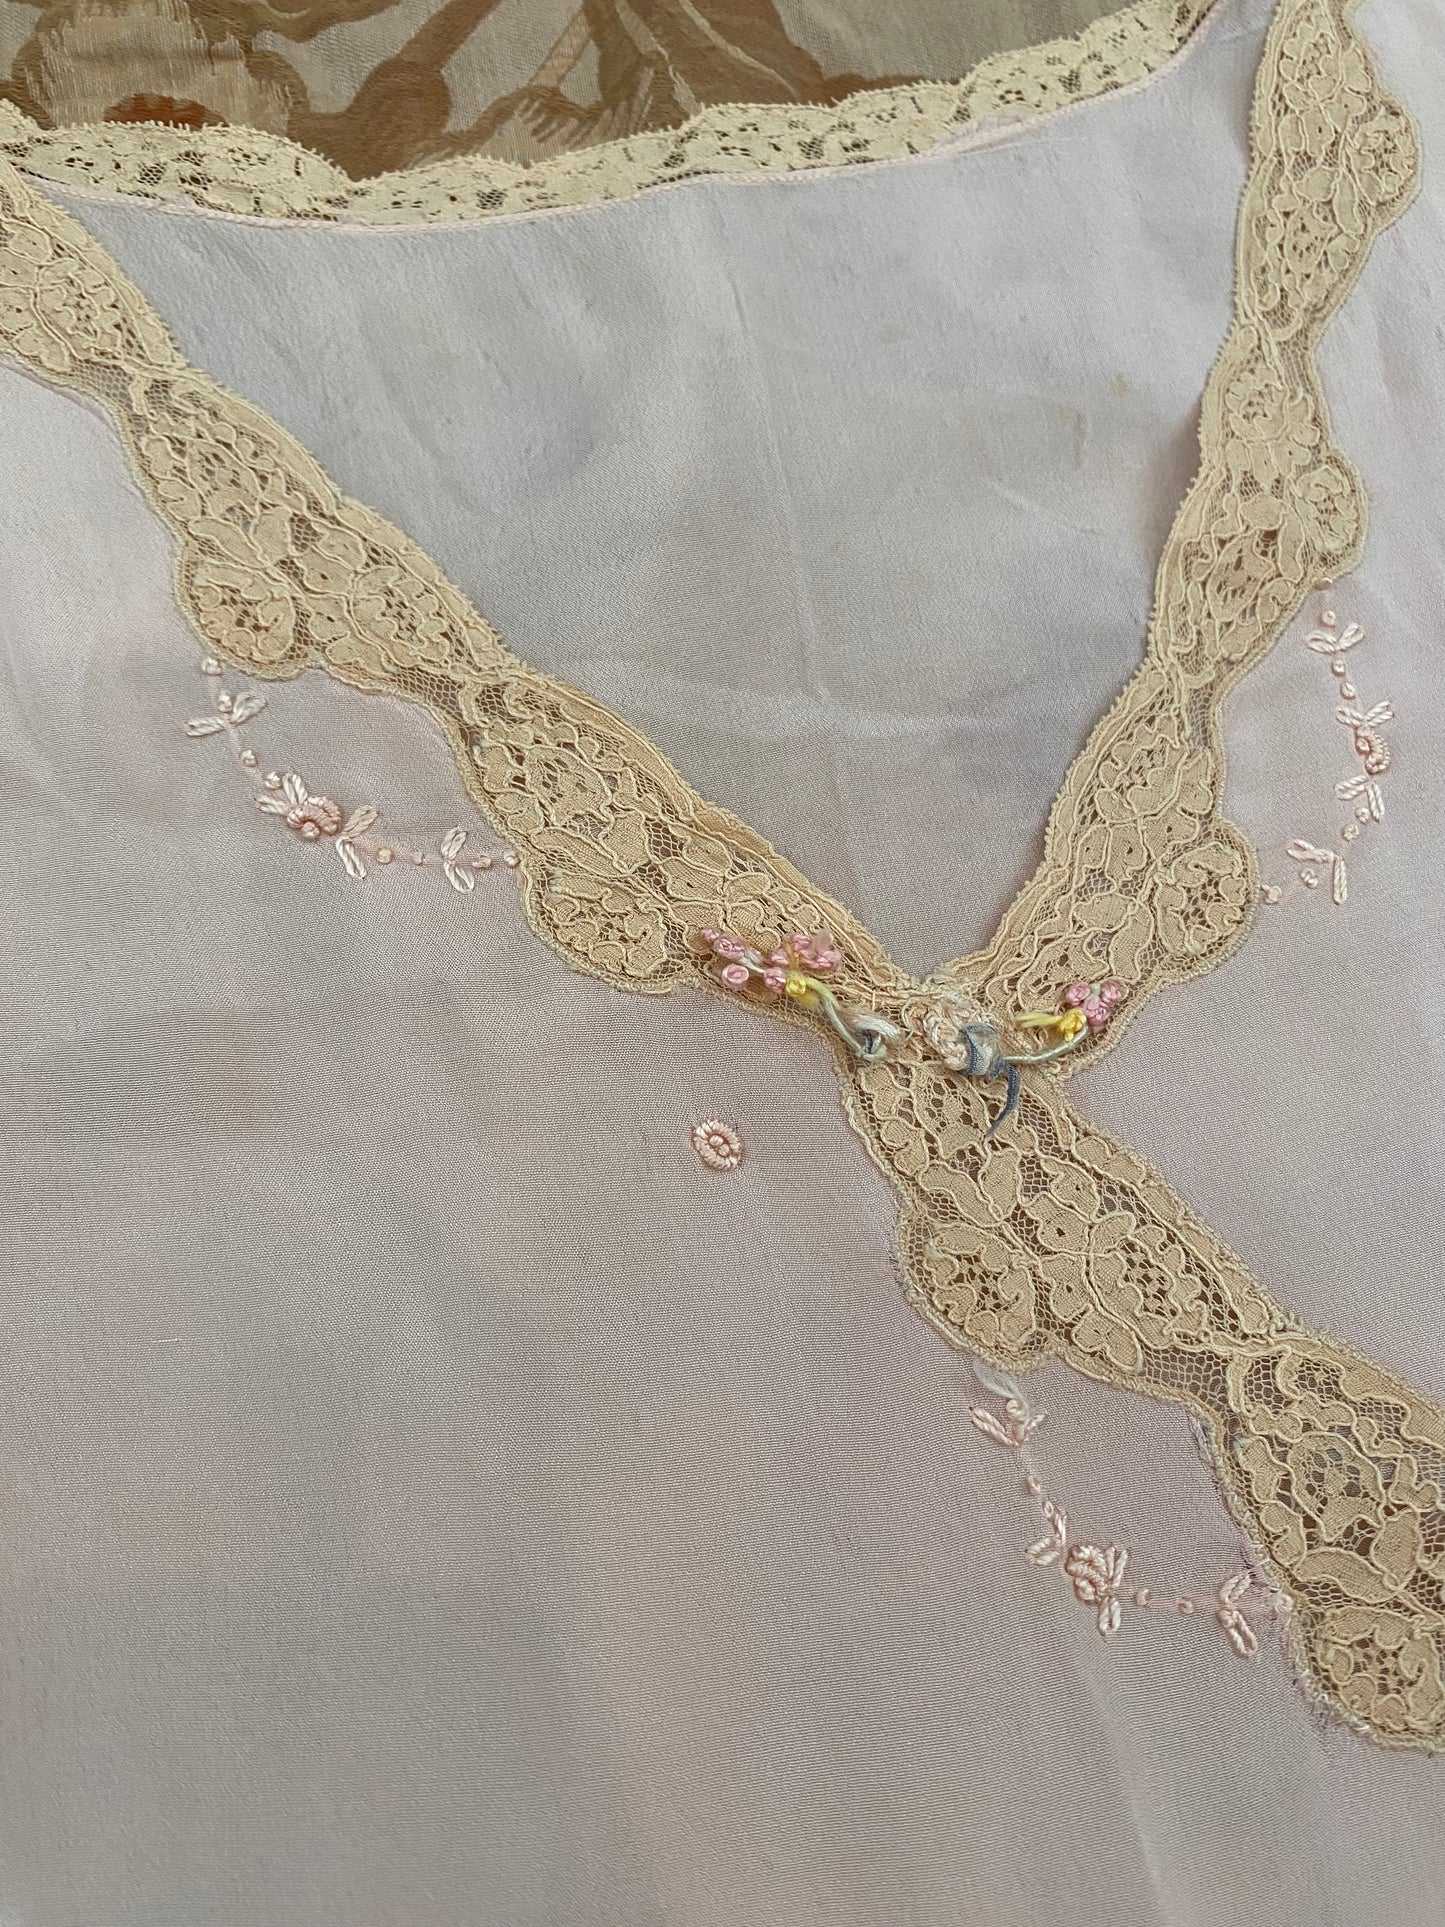 Darling 1920s Blush Silk Top w/ Rosettes + Embroidery- M/L